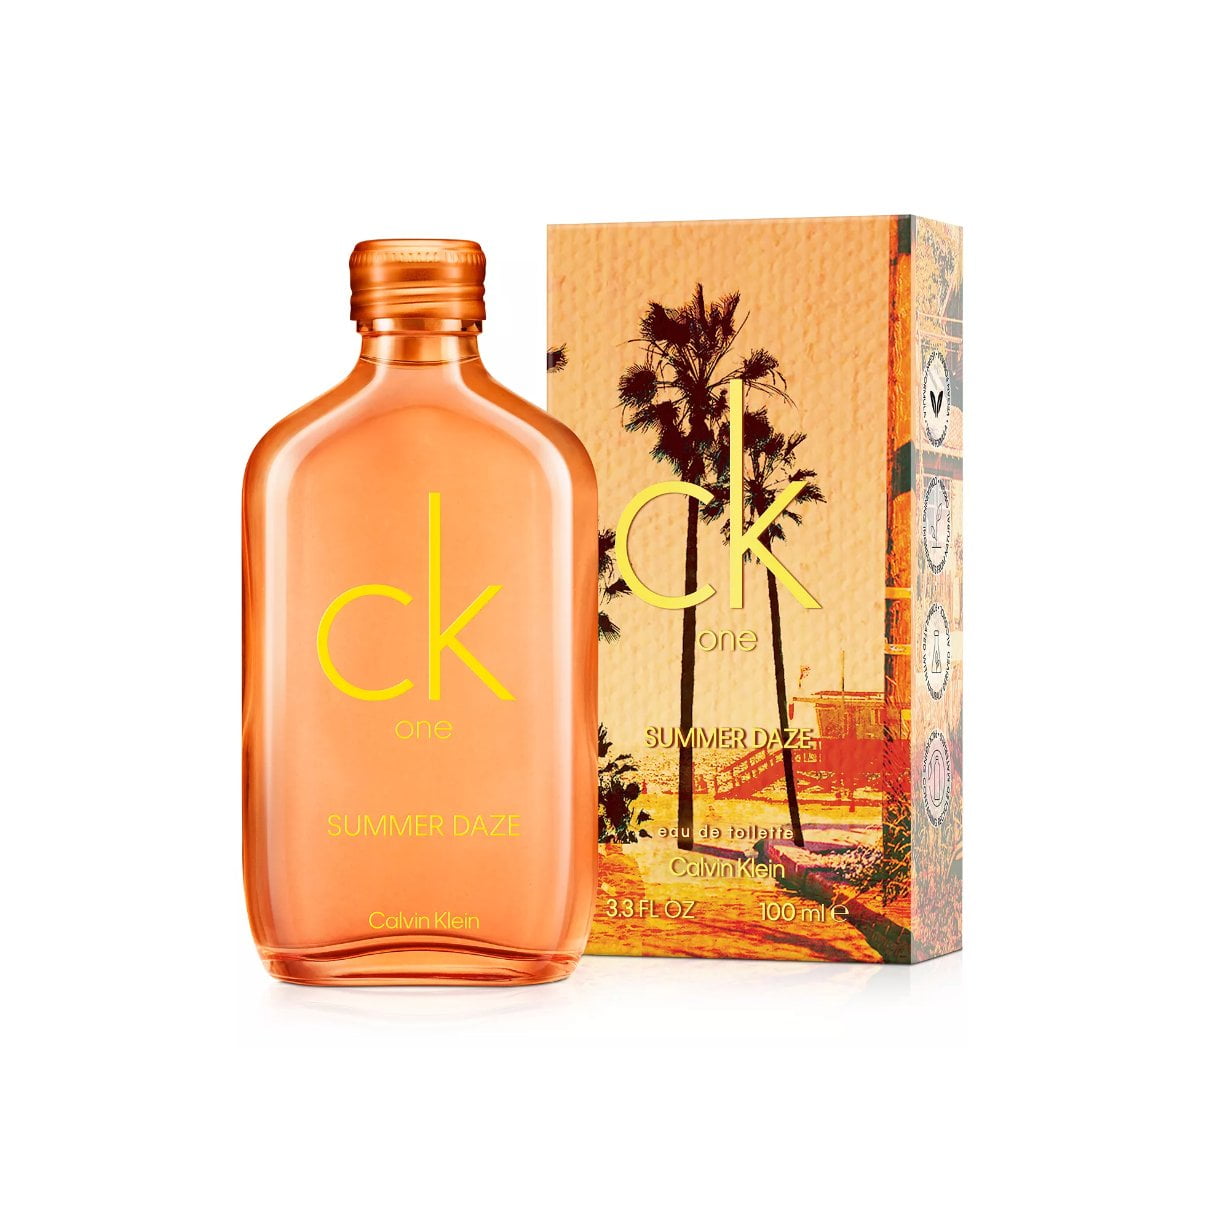 CK One Summer 2020 Calvin Klein perfume - a fragrance for women and men 2020